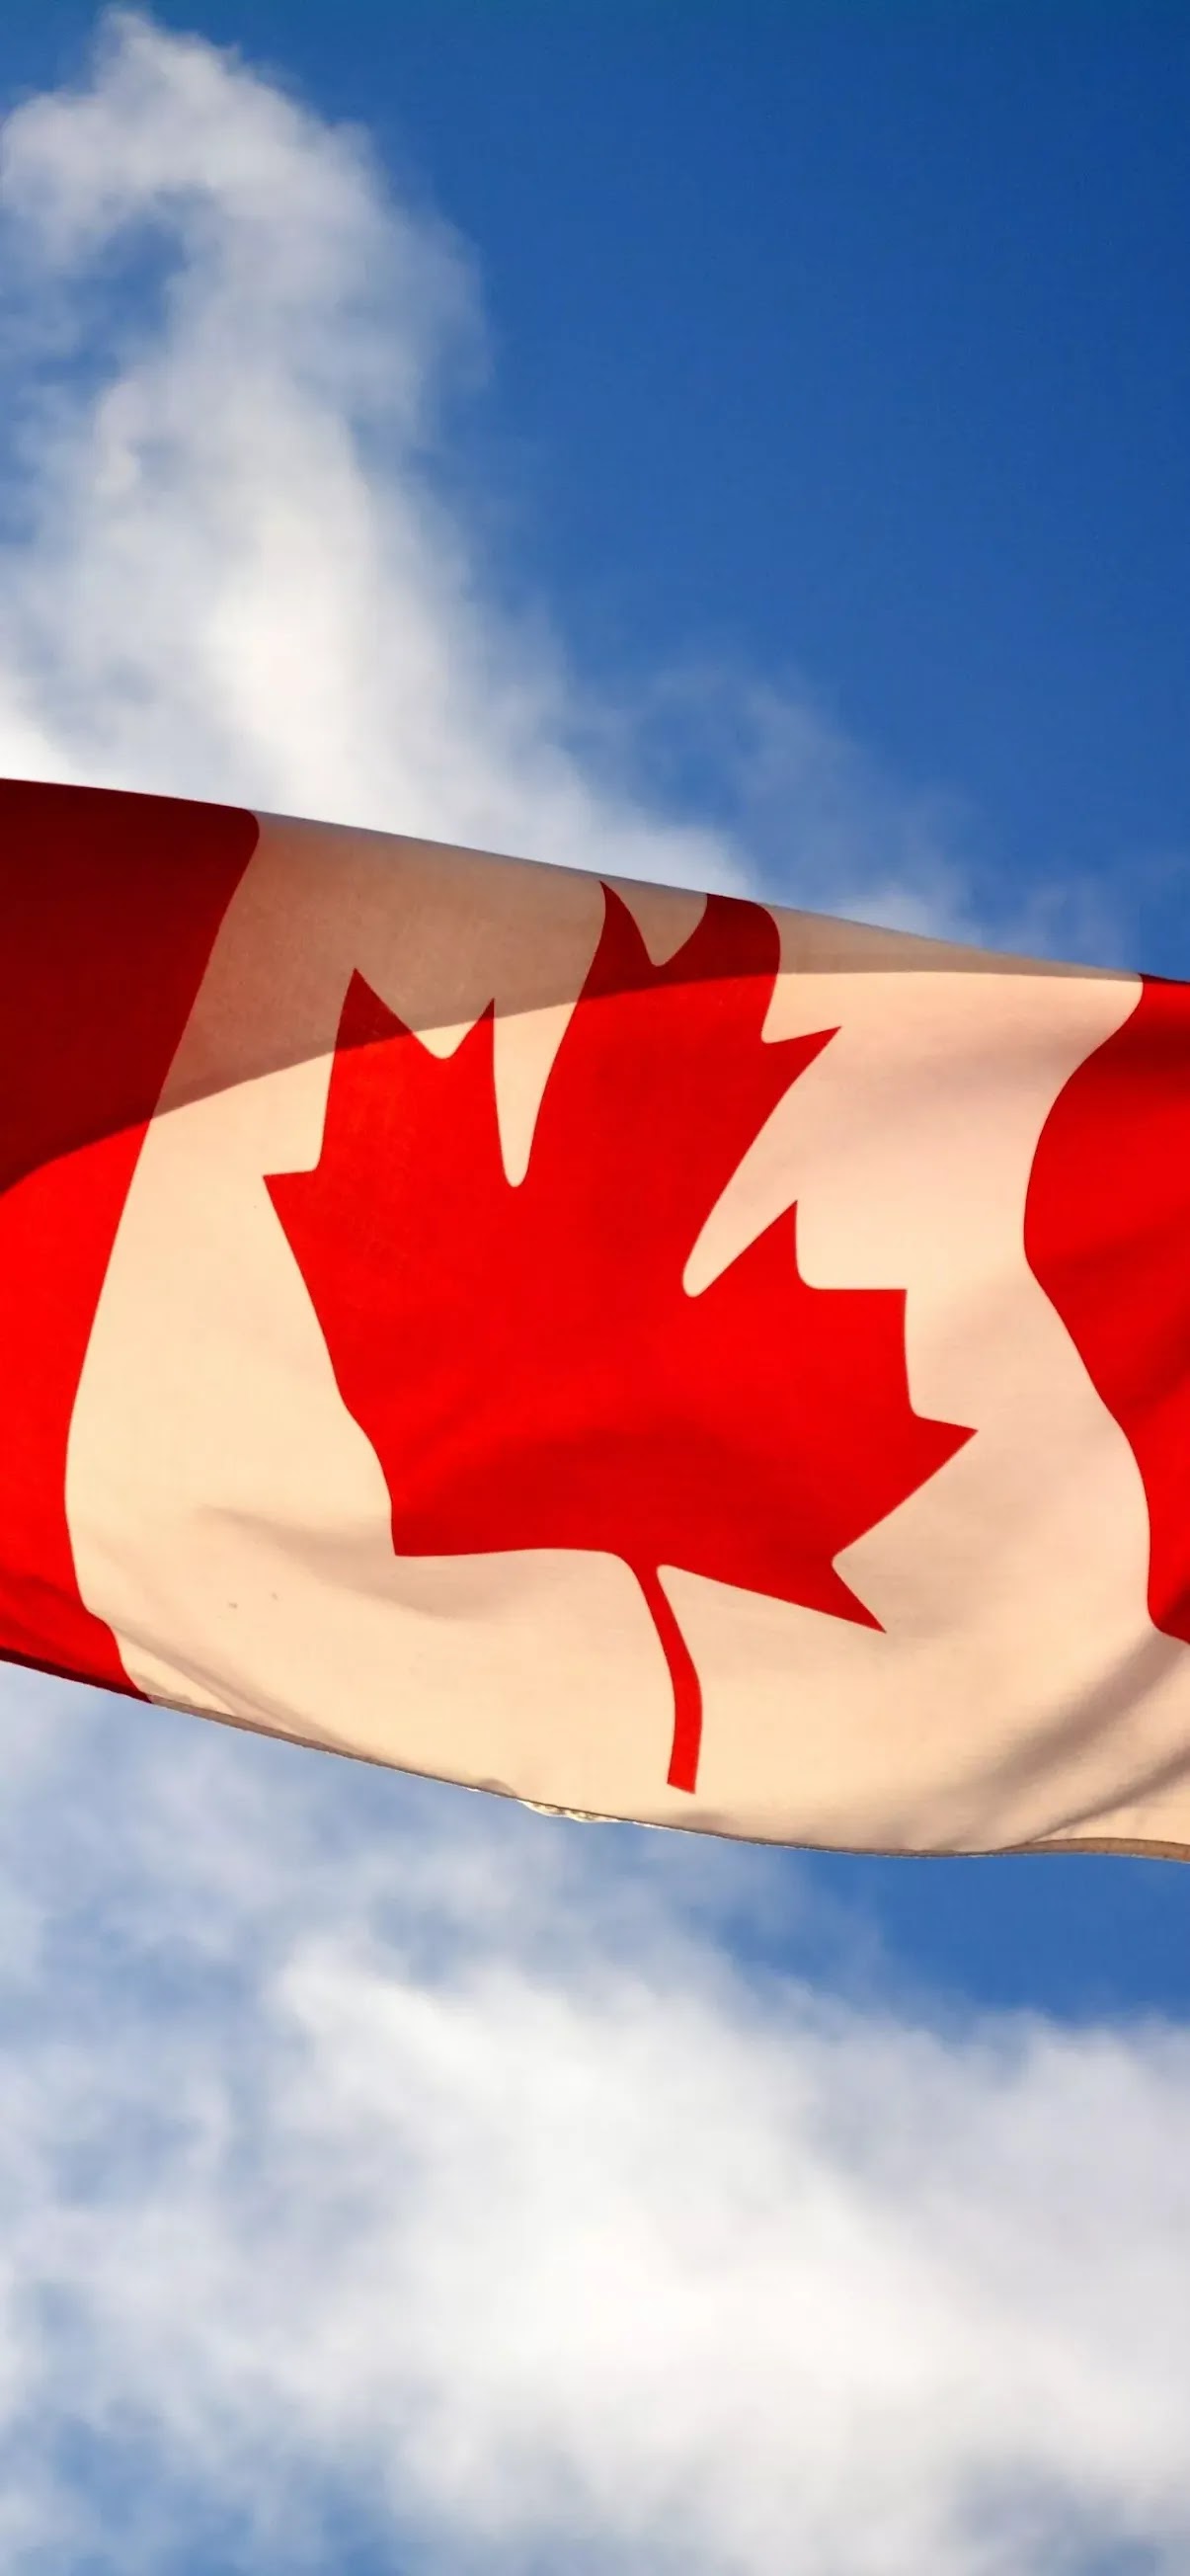 Canada flag image wallpaper